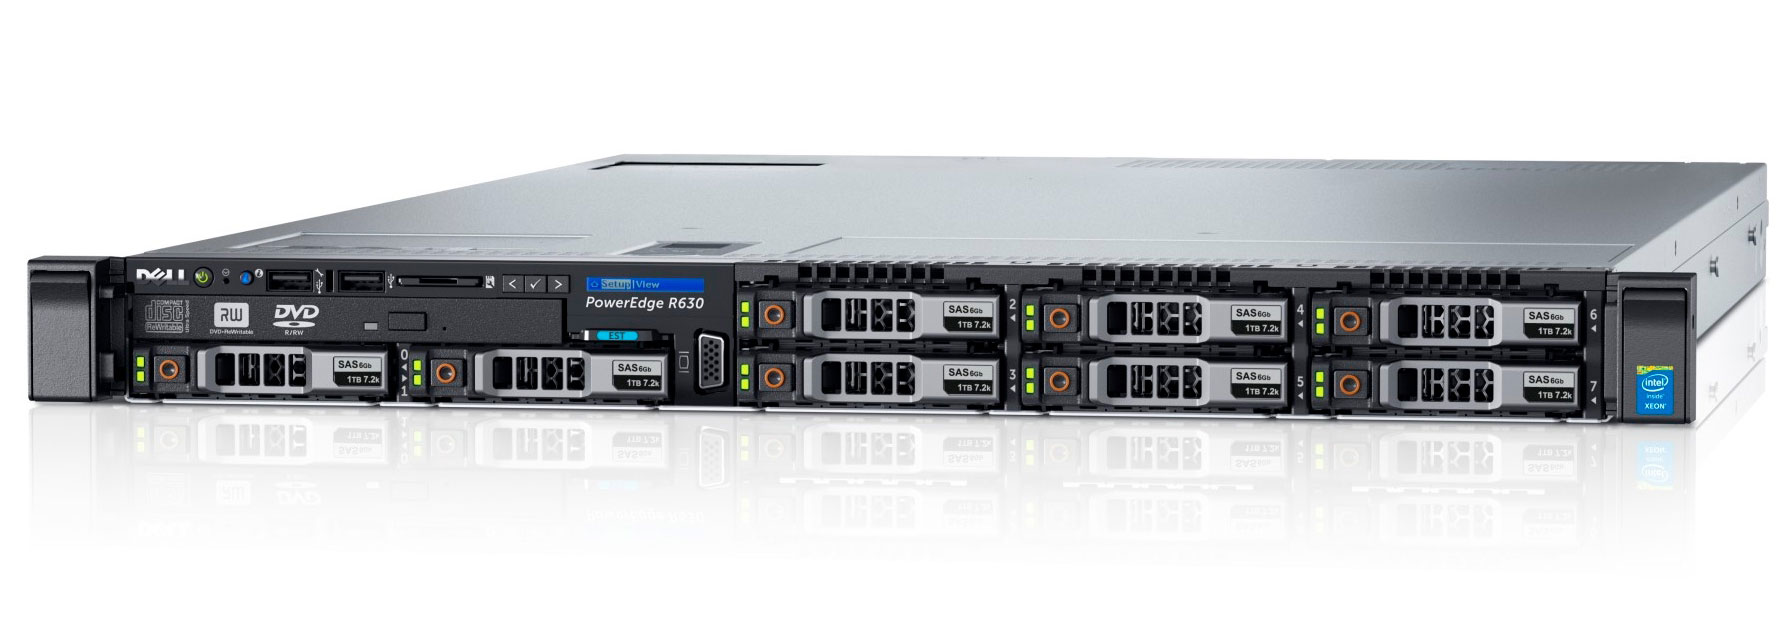 Подробное фото Сервер DELL PowerEdge R630 2x Xeon E5-2667v3 128Gb 2133P DDR4 8x noHDD 2.5" SAS RAID Perc H730,1024Mb, DVD, 2*PSU